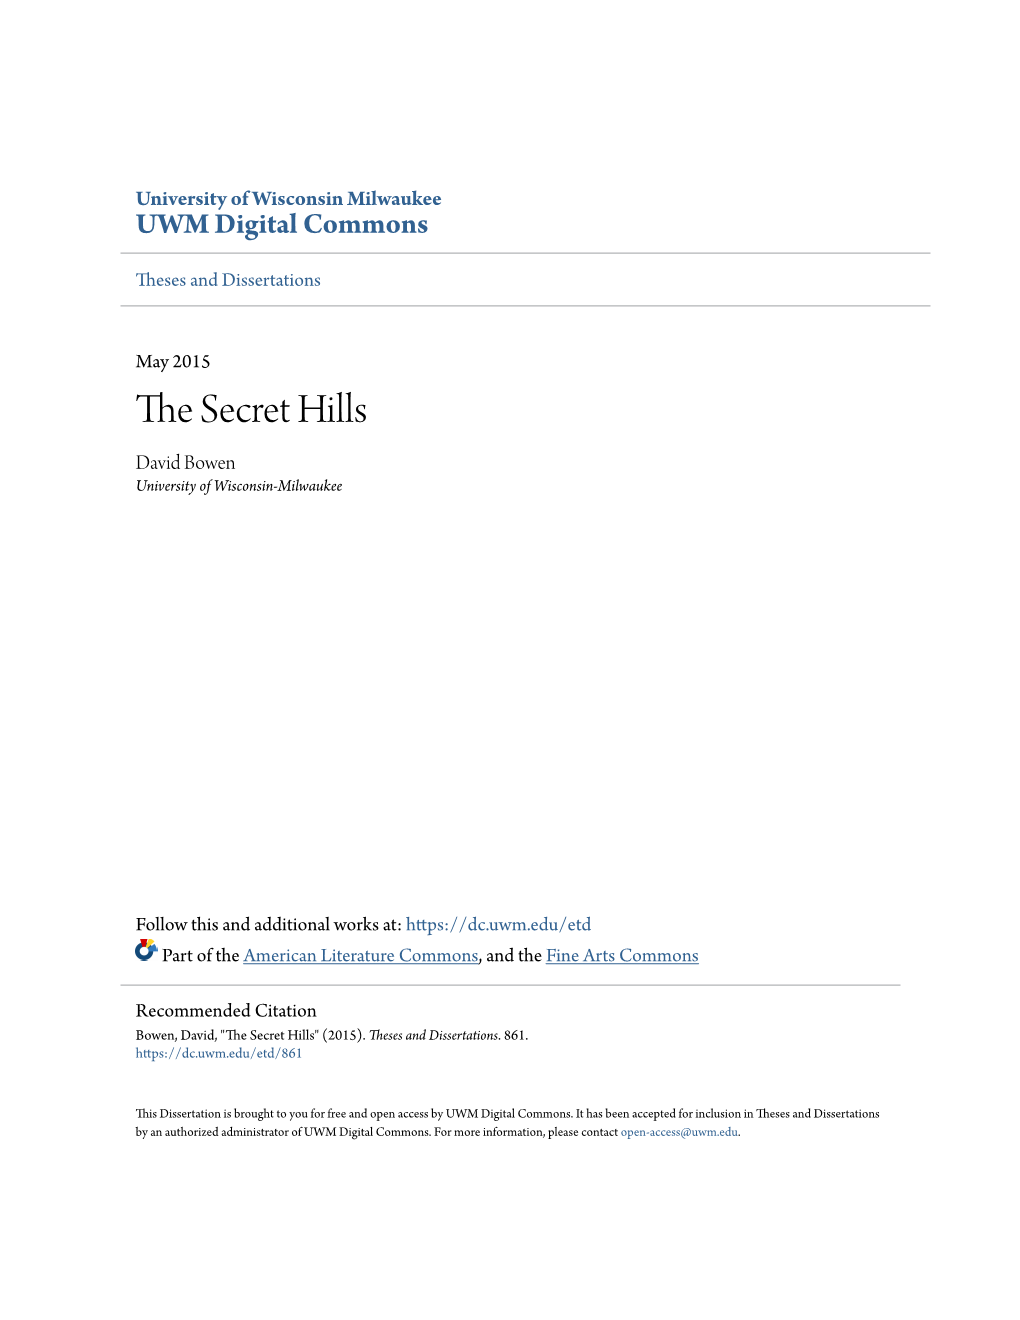 The Secret Hills